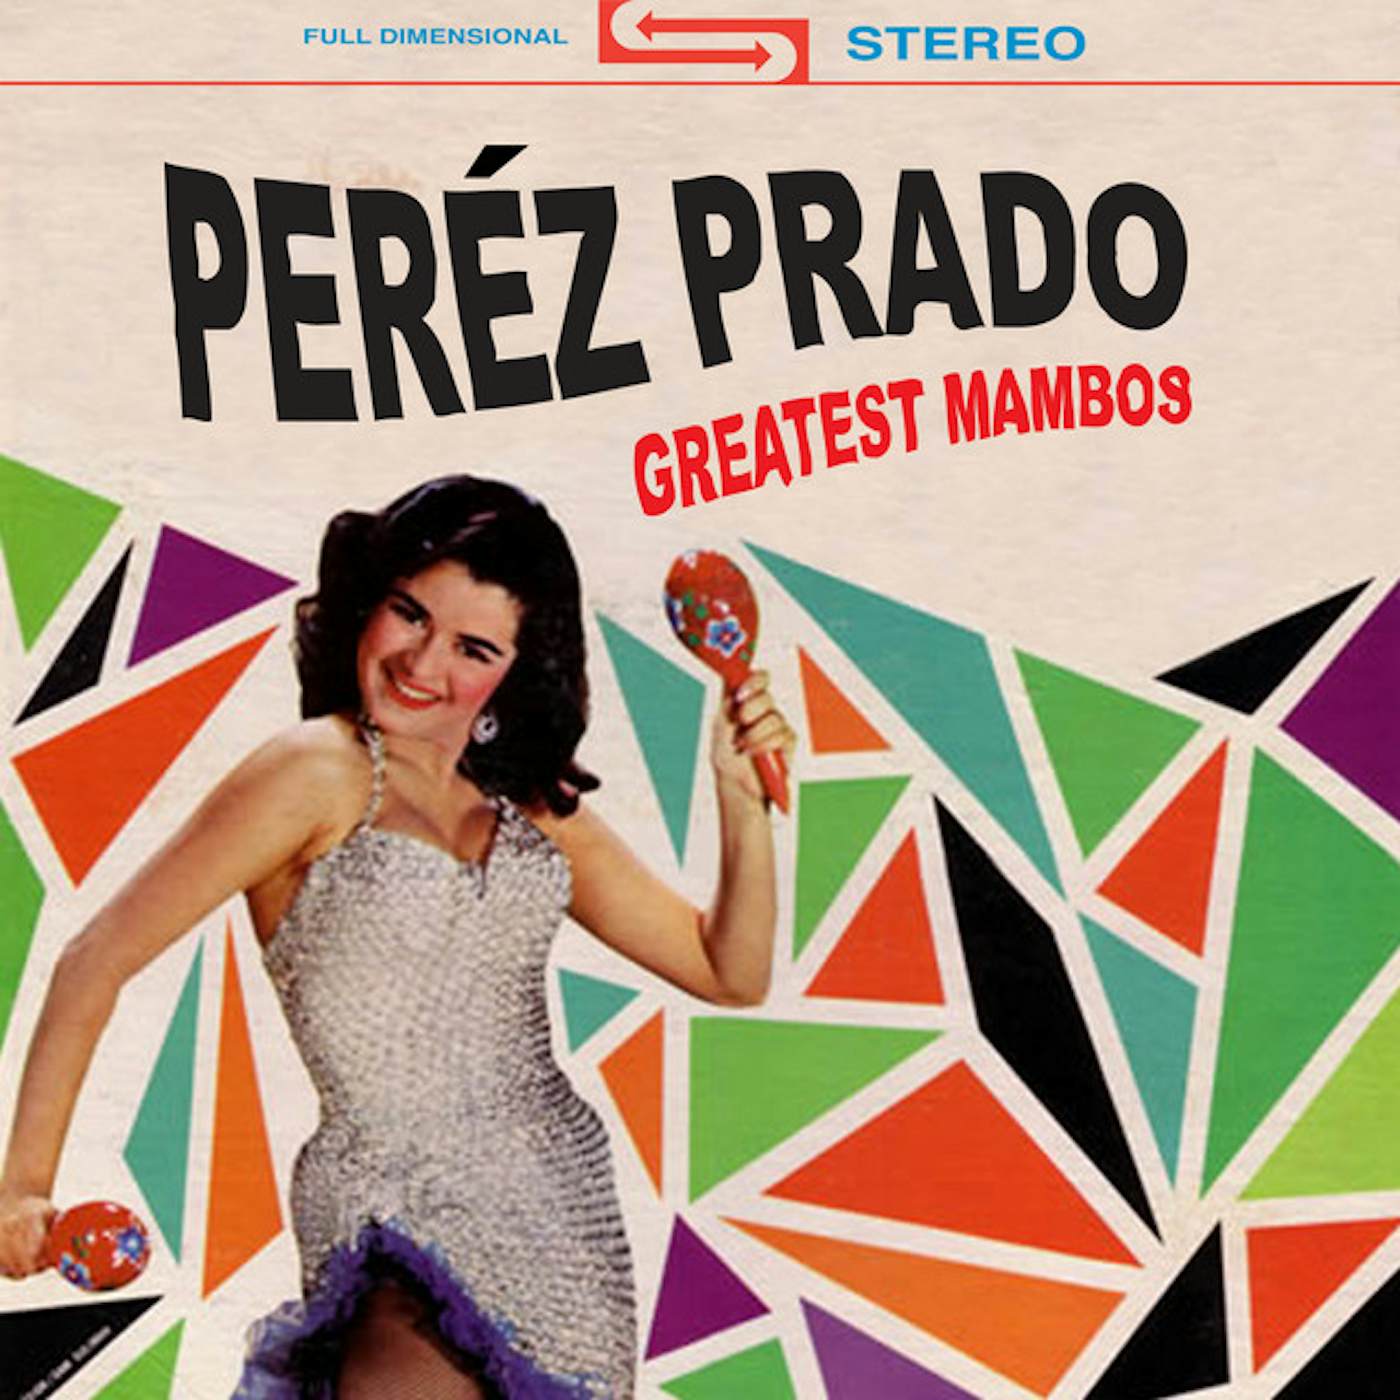 Pérez Prado Greatest Mambos Vinyl Record